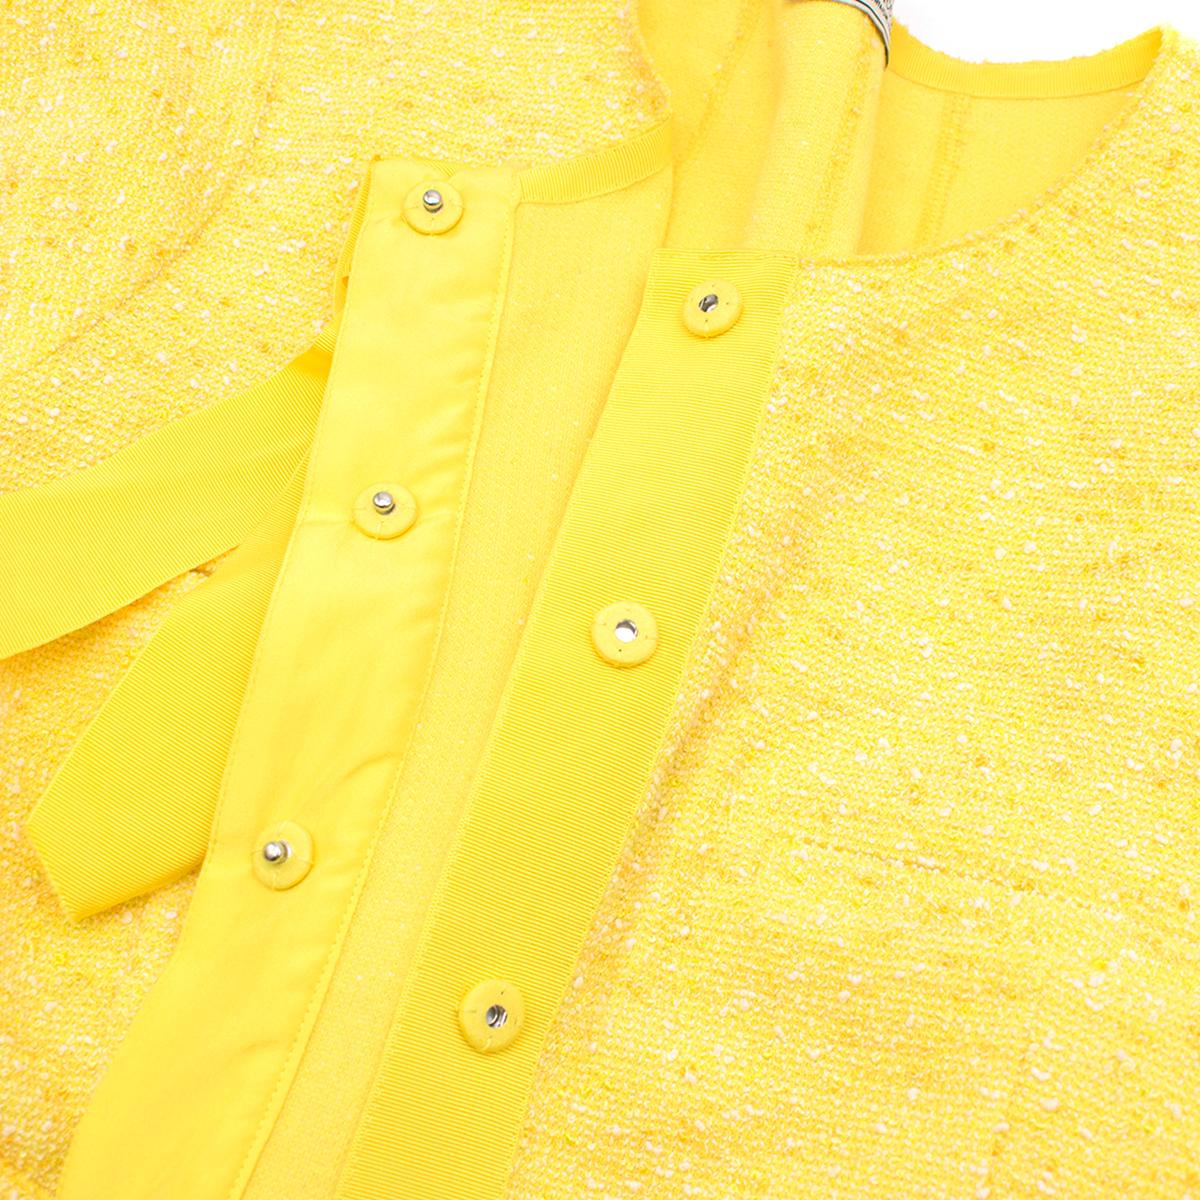 Nina Ricci Yellow Tweed Jacket - Size US 6 For Sale 1